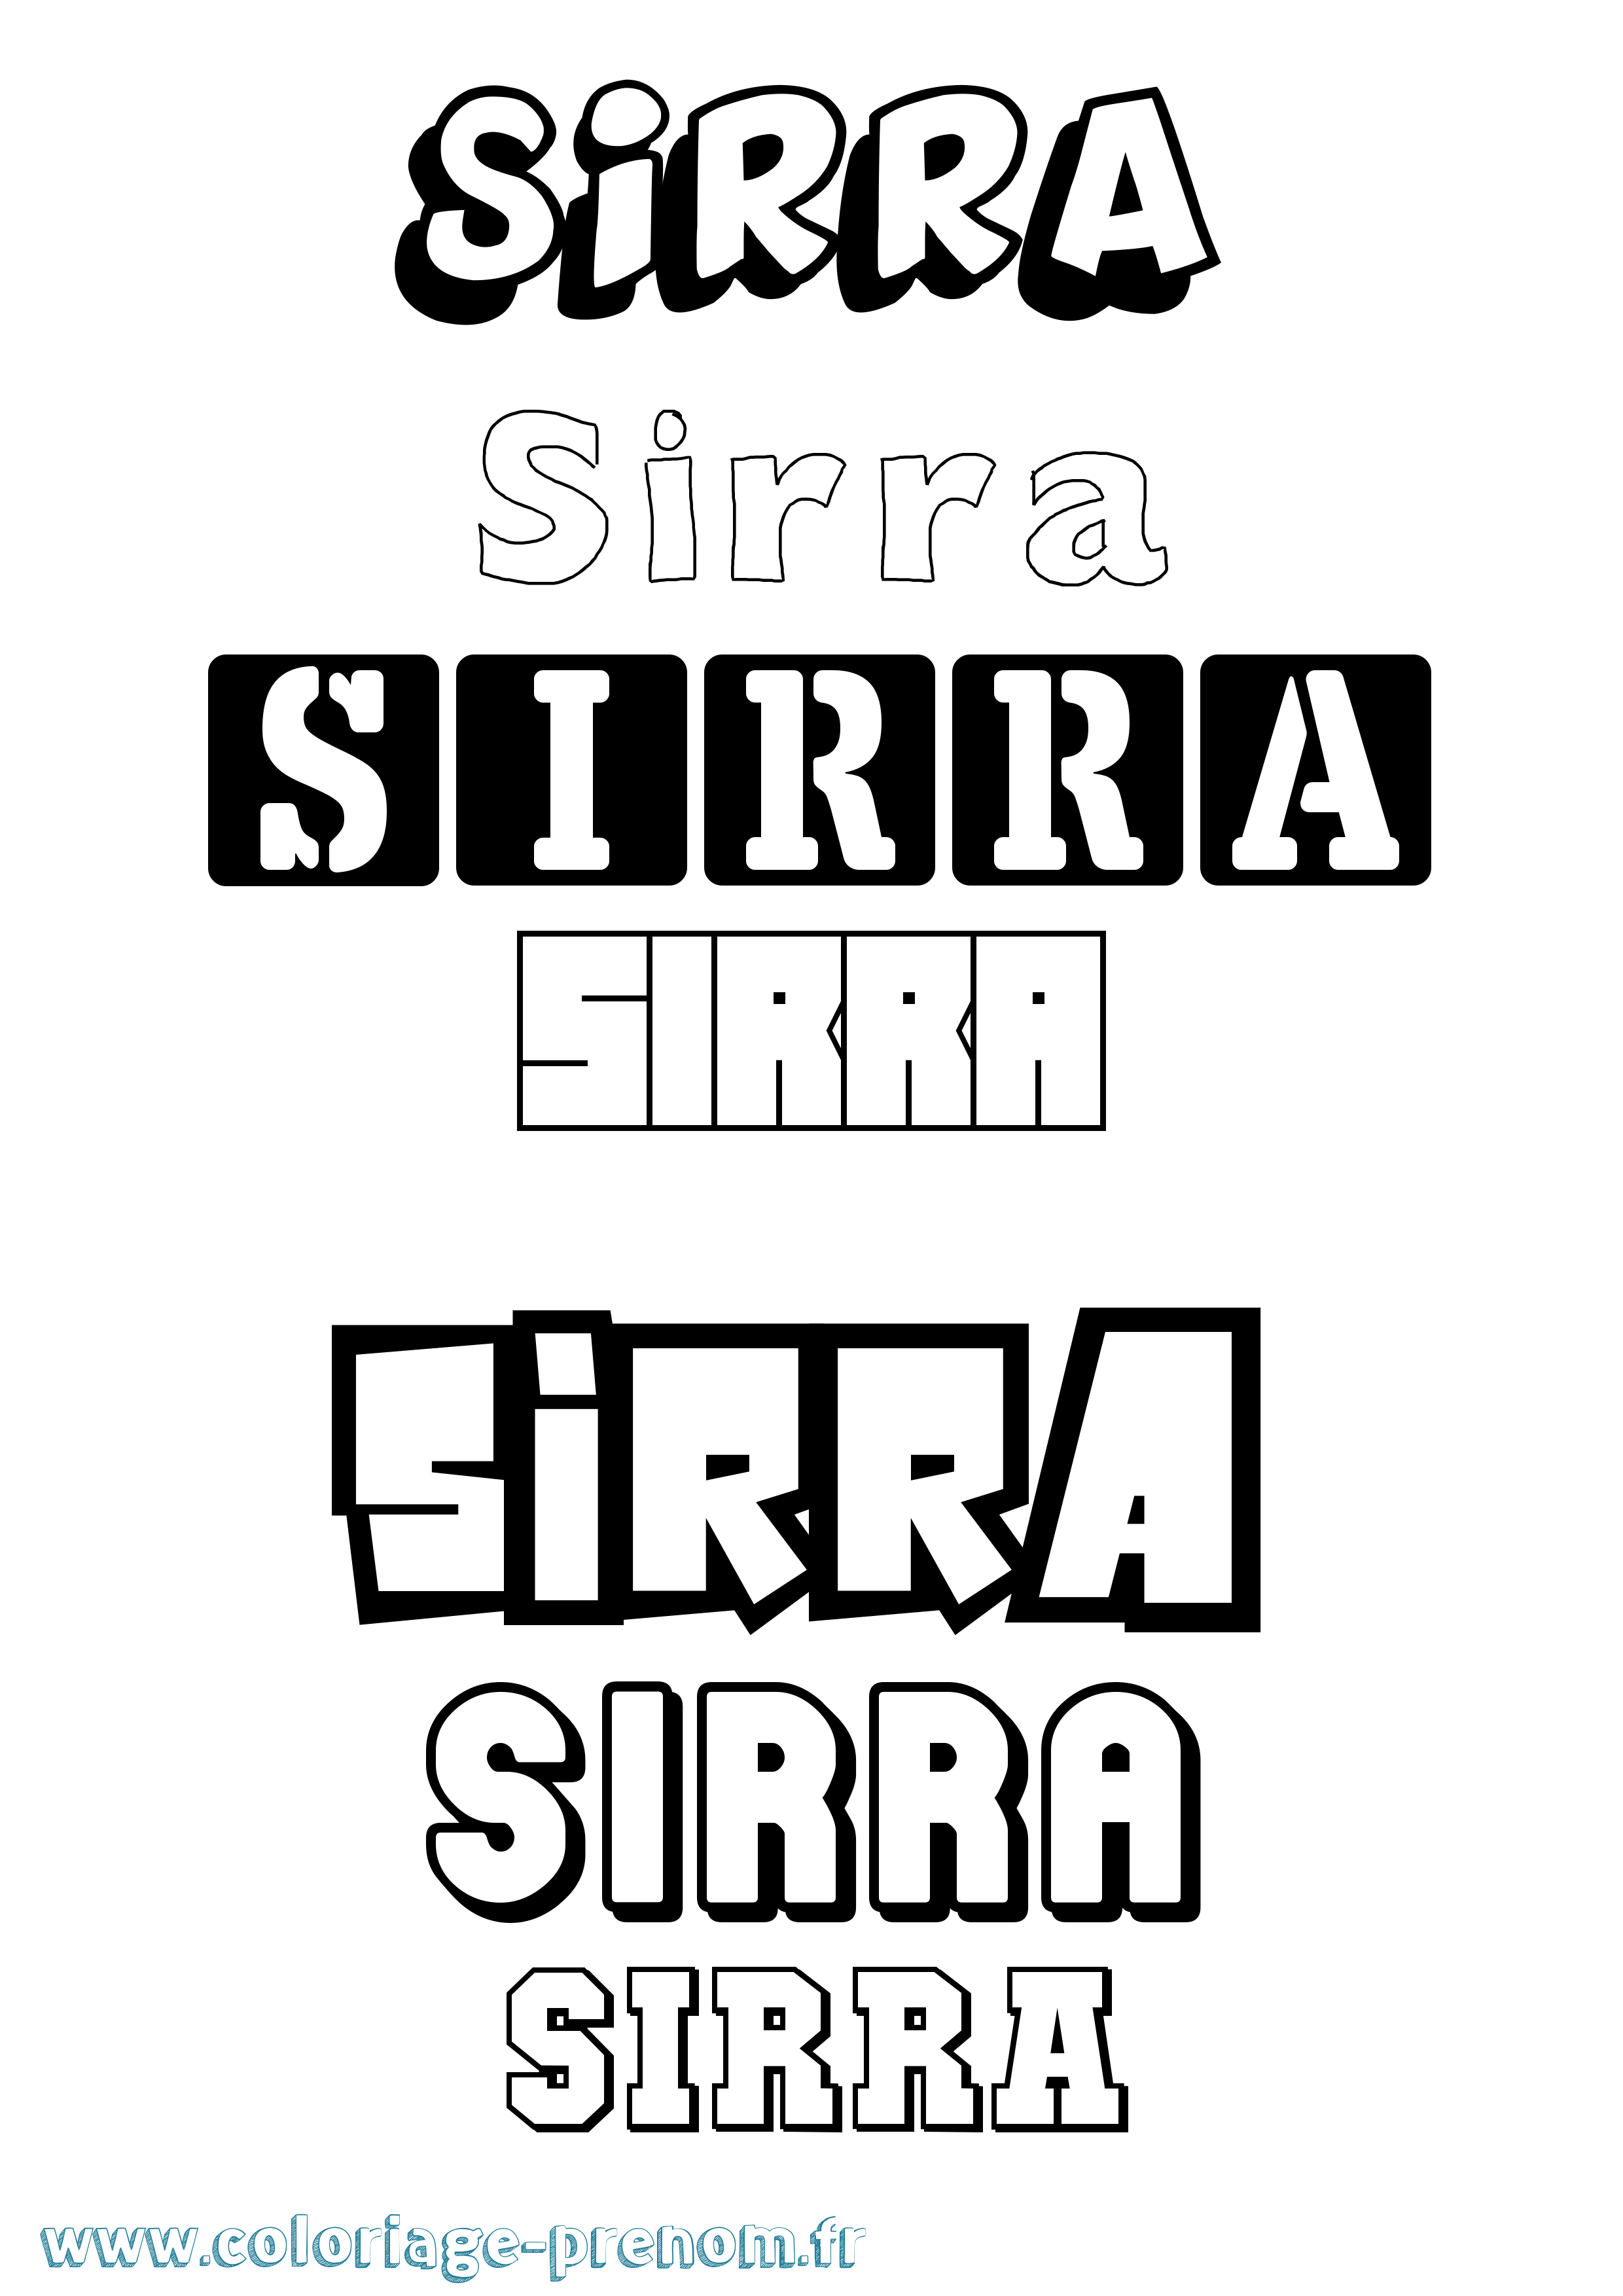 Coloriage prénom Sirra Simple